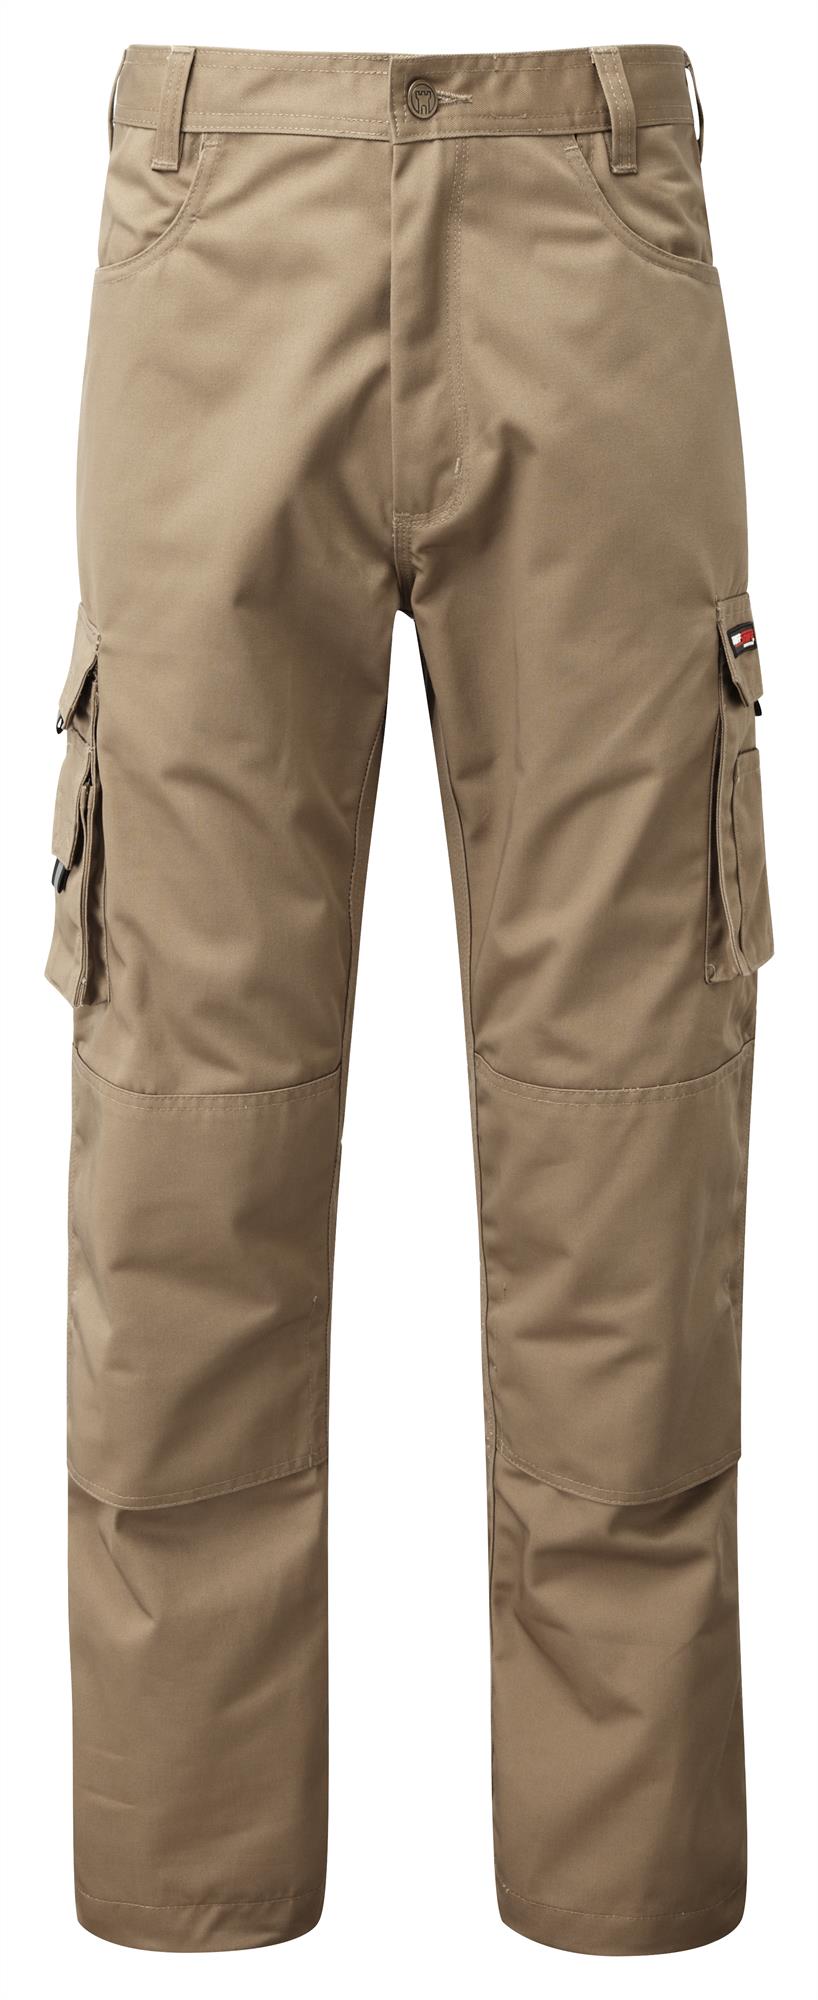 TuffStuff Pro Work stone heavyweight polycotton knee-pad holster pocket combat work trouser #711